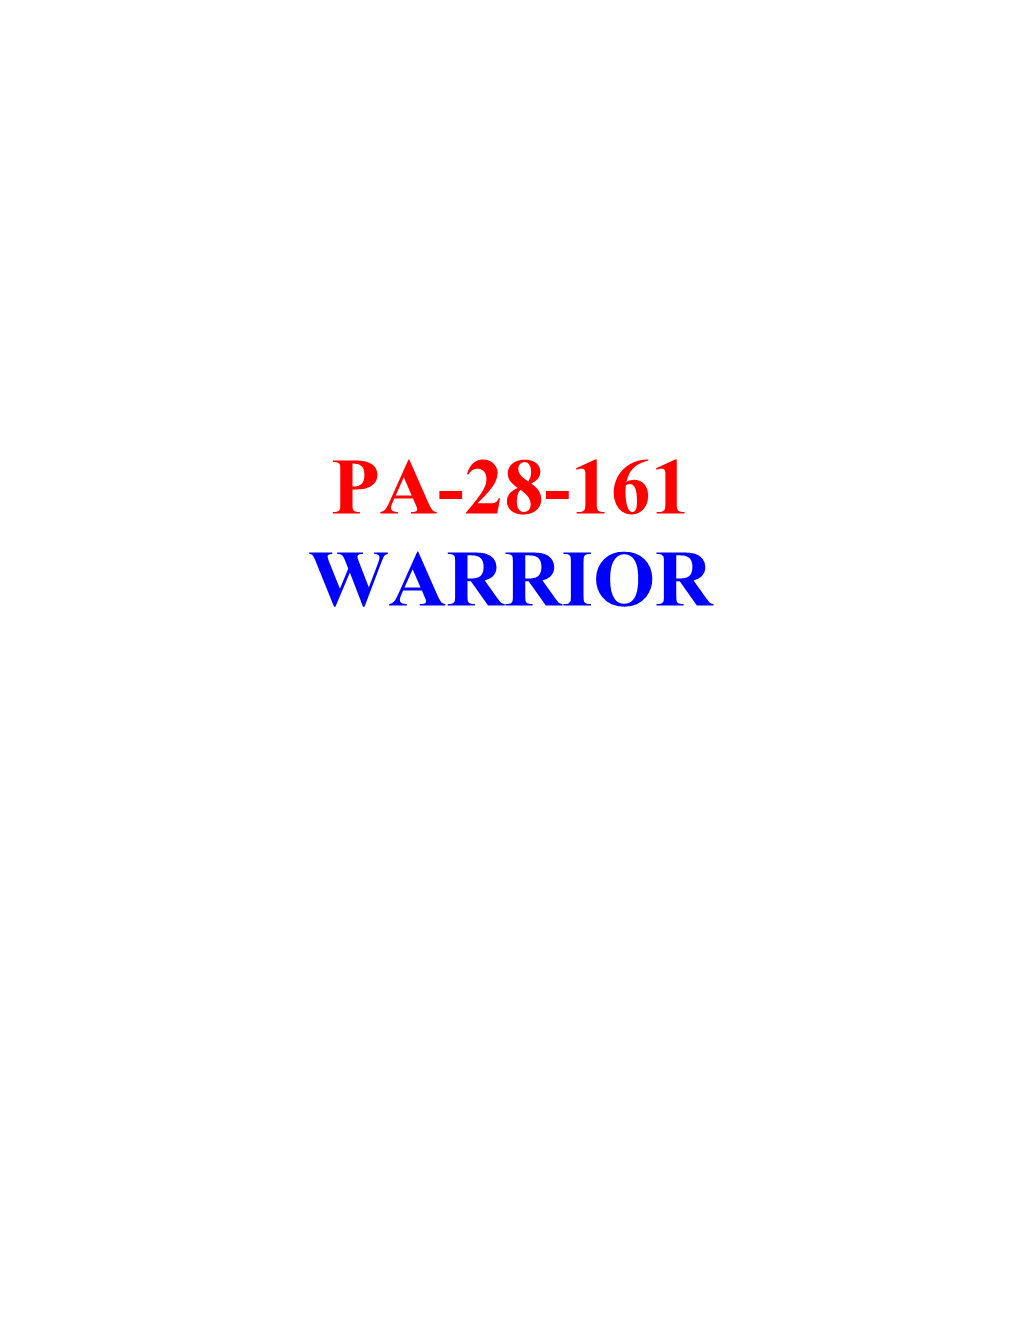 MNFC PA-28-161 (Warrior) OPERATING CHECKLIST